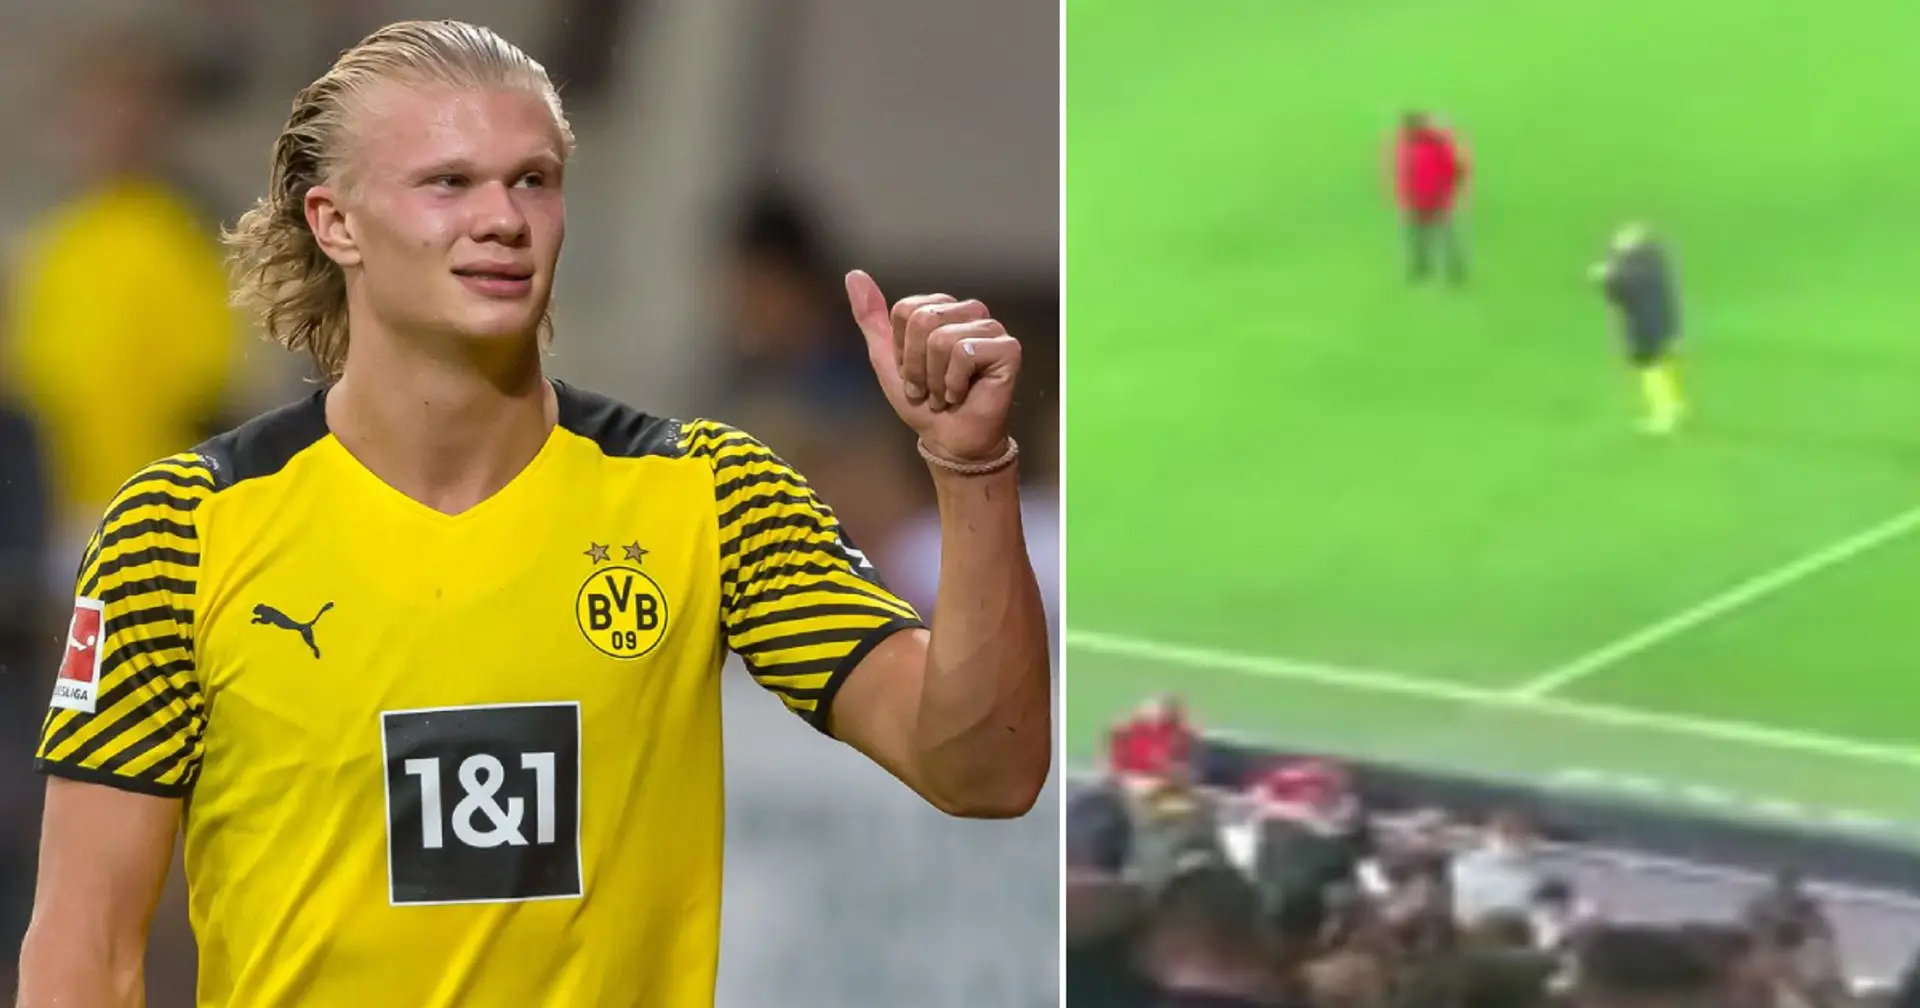 Haaland makes simple gesture, pundits interpret it as goodbye Dortmund